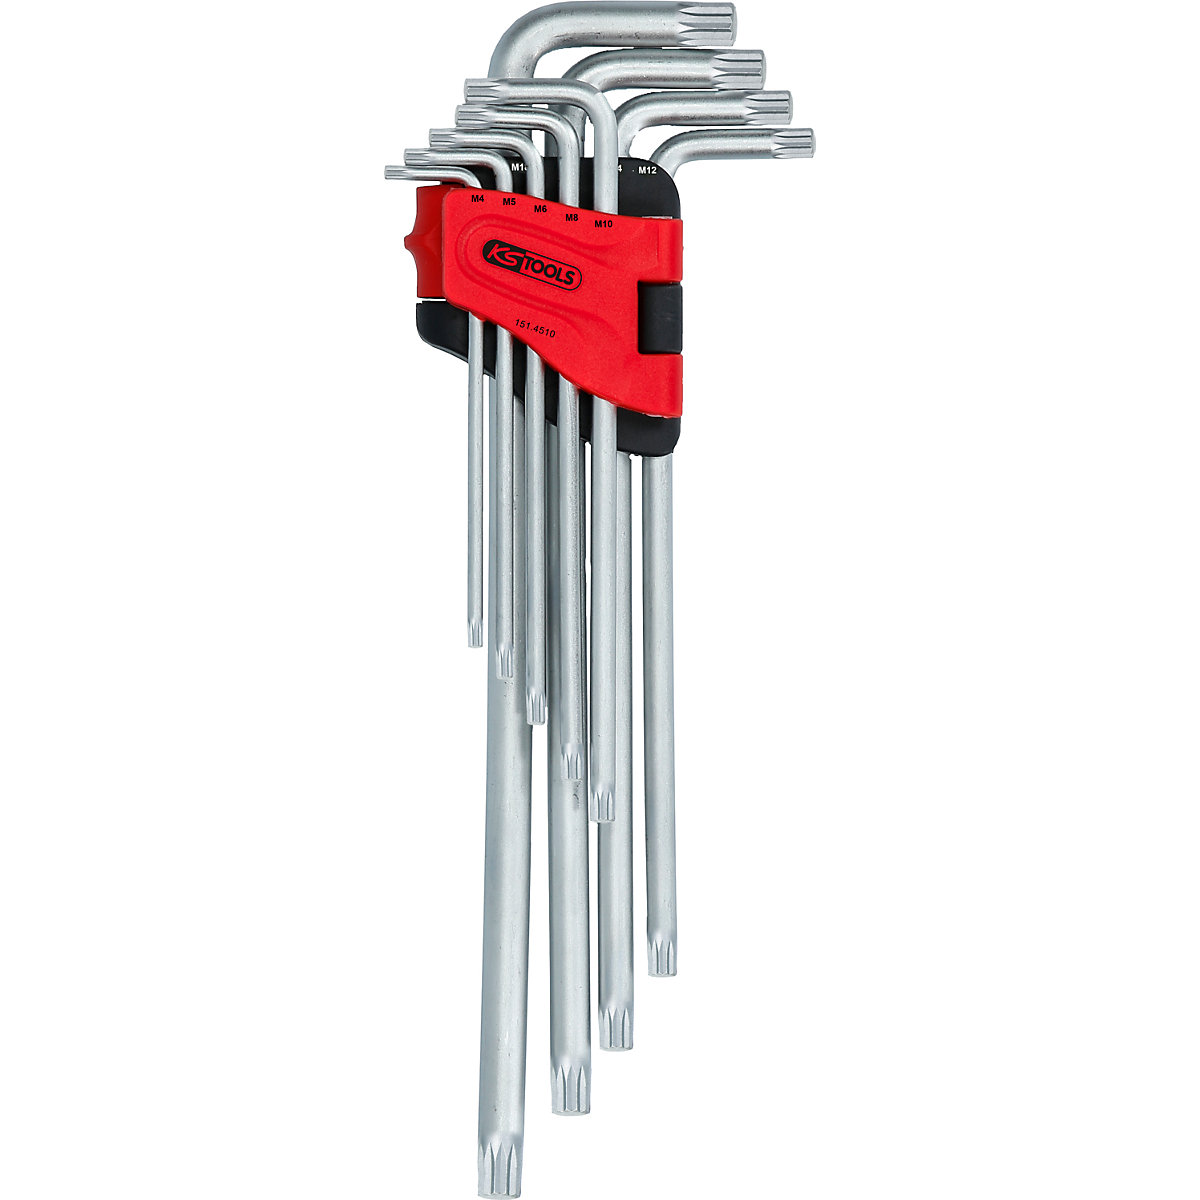 Komplet kotnih ključev XL – KS Tools